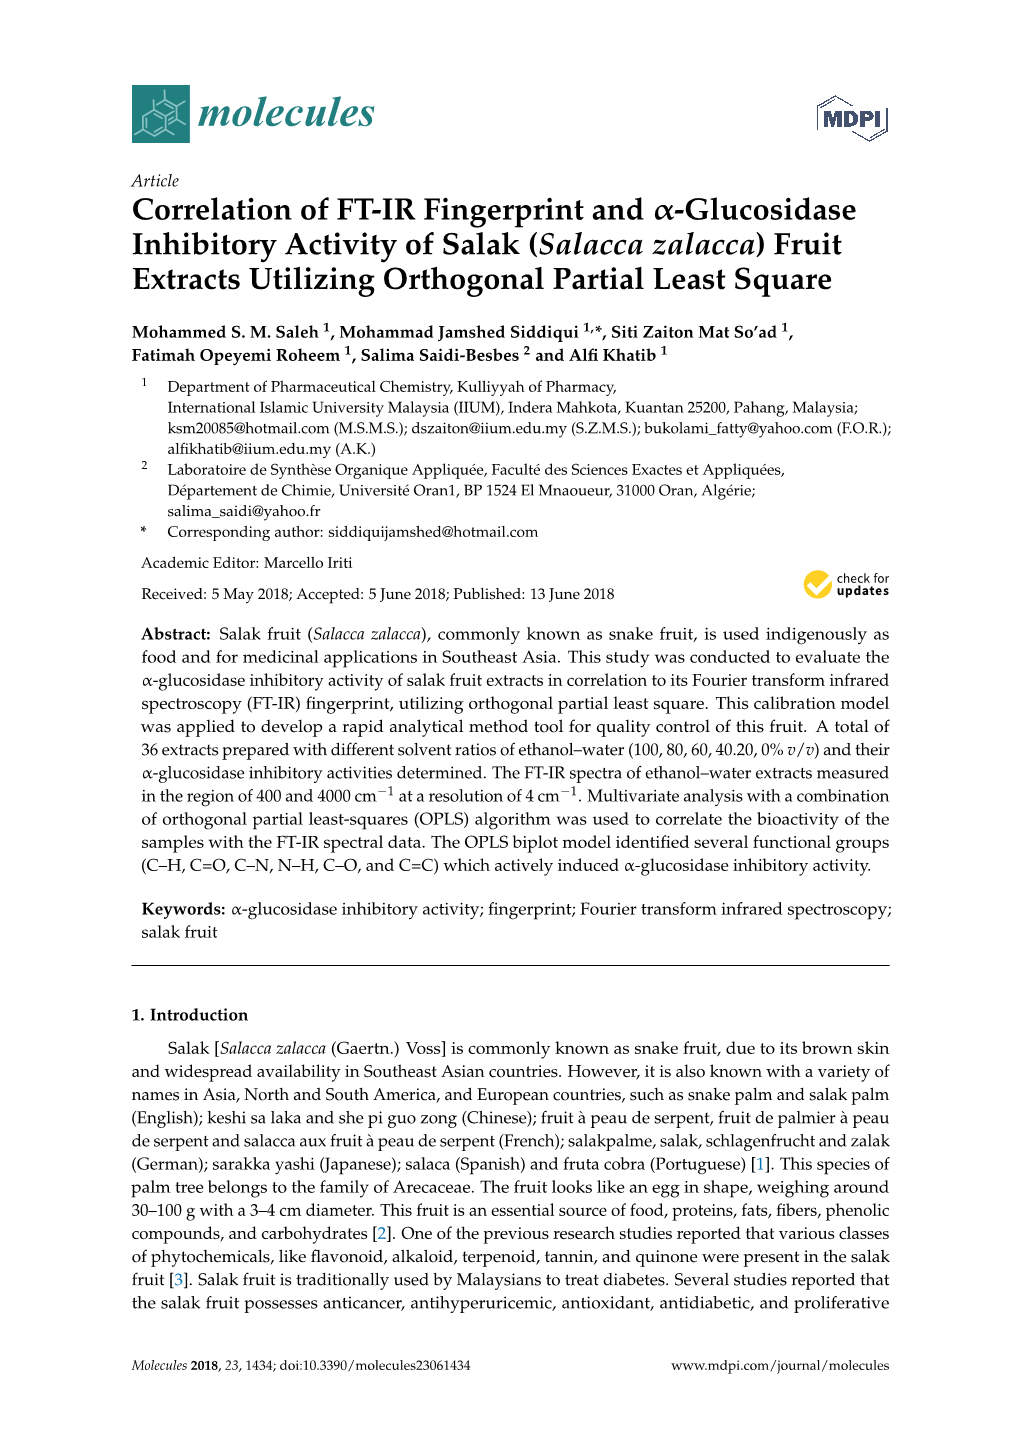 Correlation of FT-IR Fingerprint and Α-Glucosidase Inhibitory Activity of Salak (Salacca Zalacca) Fruit Extracts Utilizing Orthogonal Partial Least Square